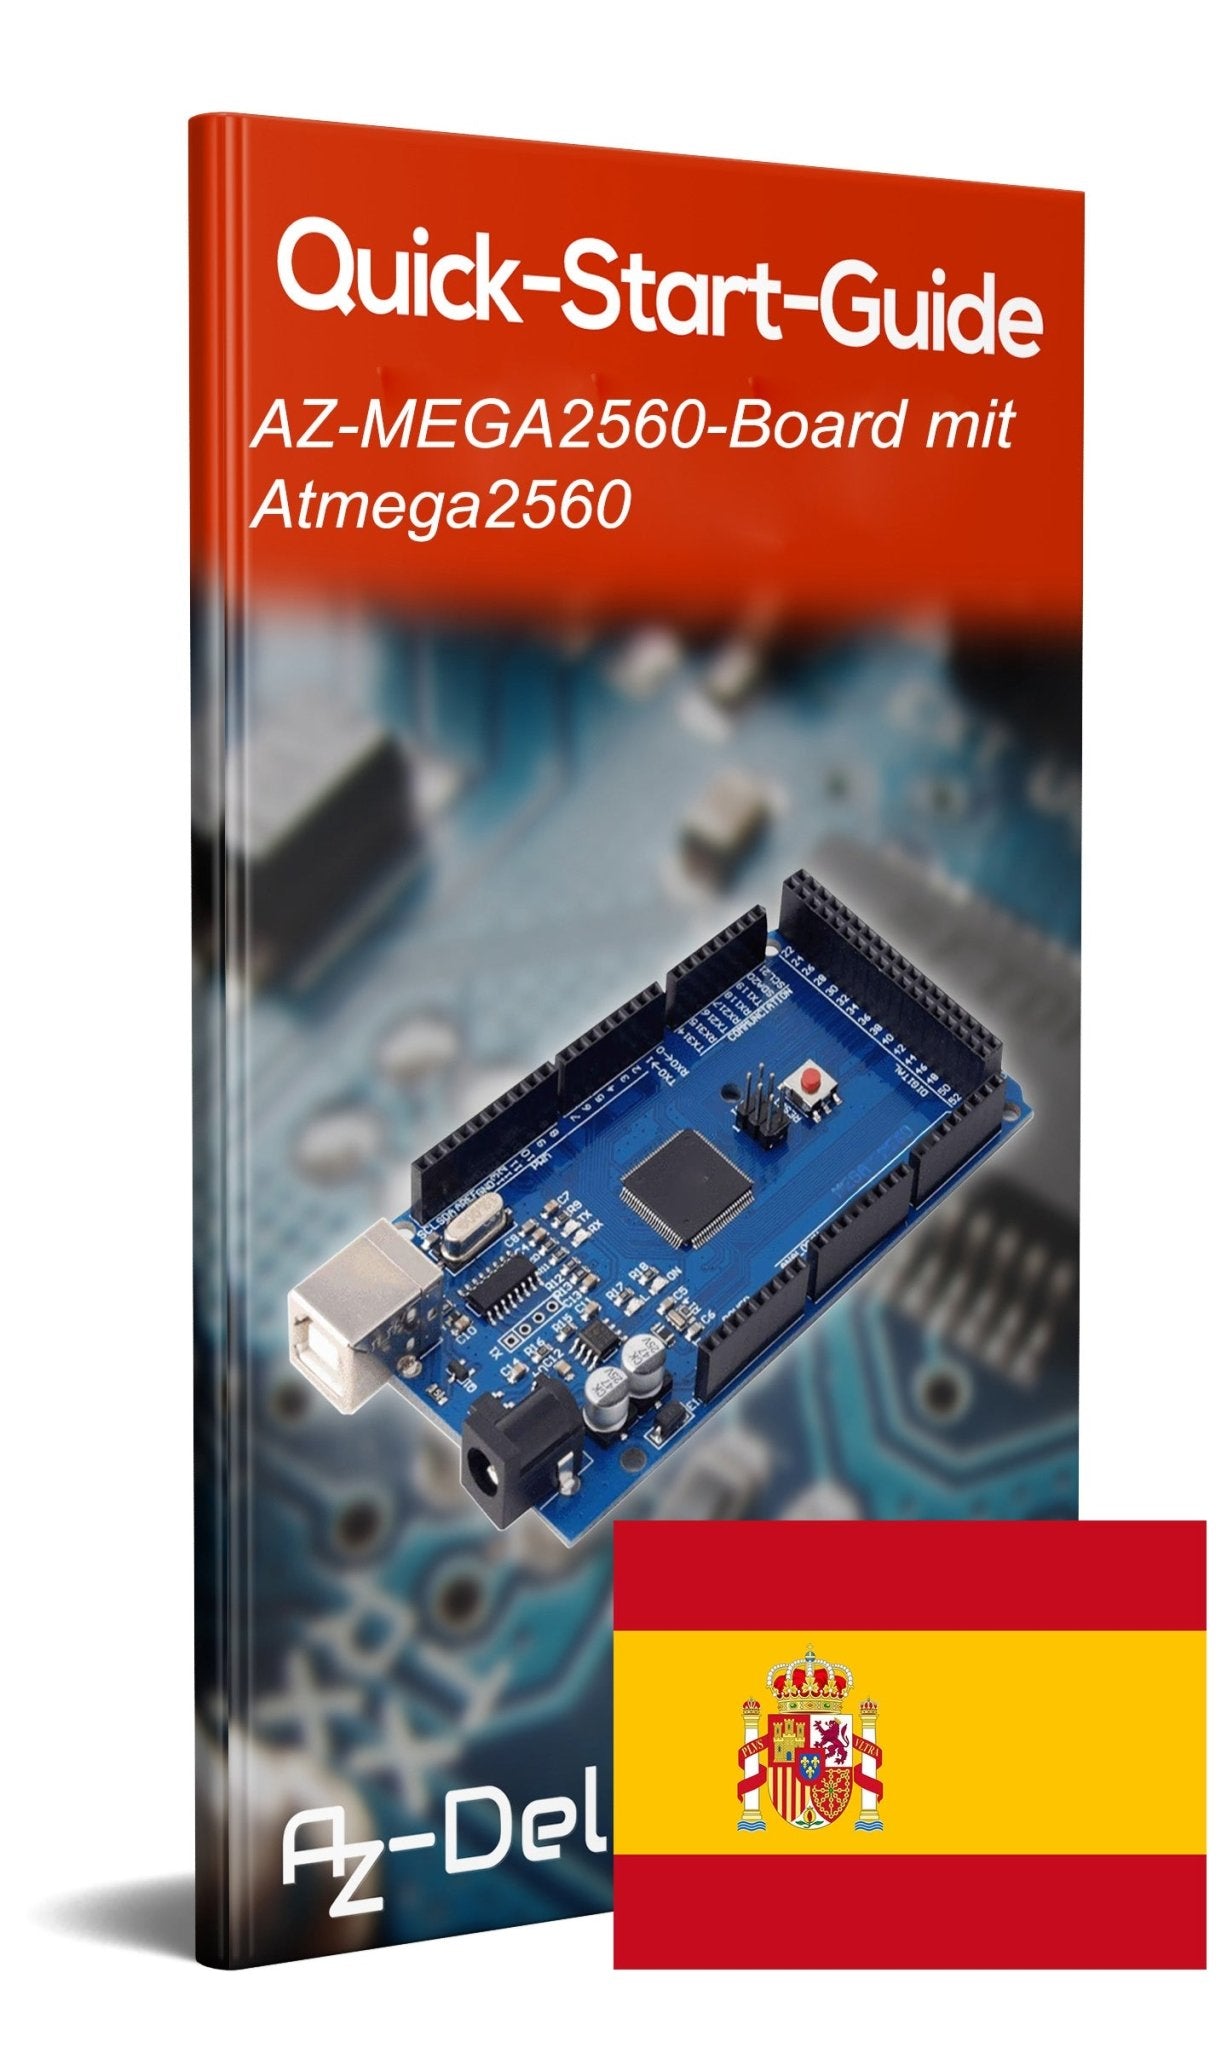 AZ-MEGA2560-Board mit ATmega2560 - AZ-Delivery